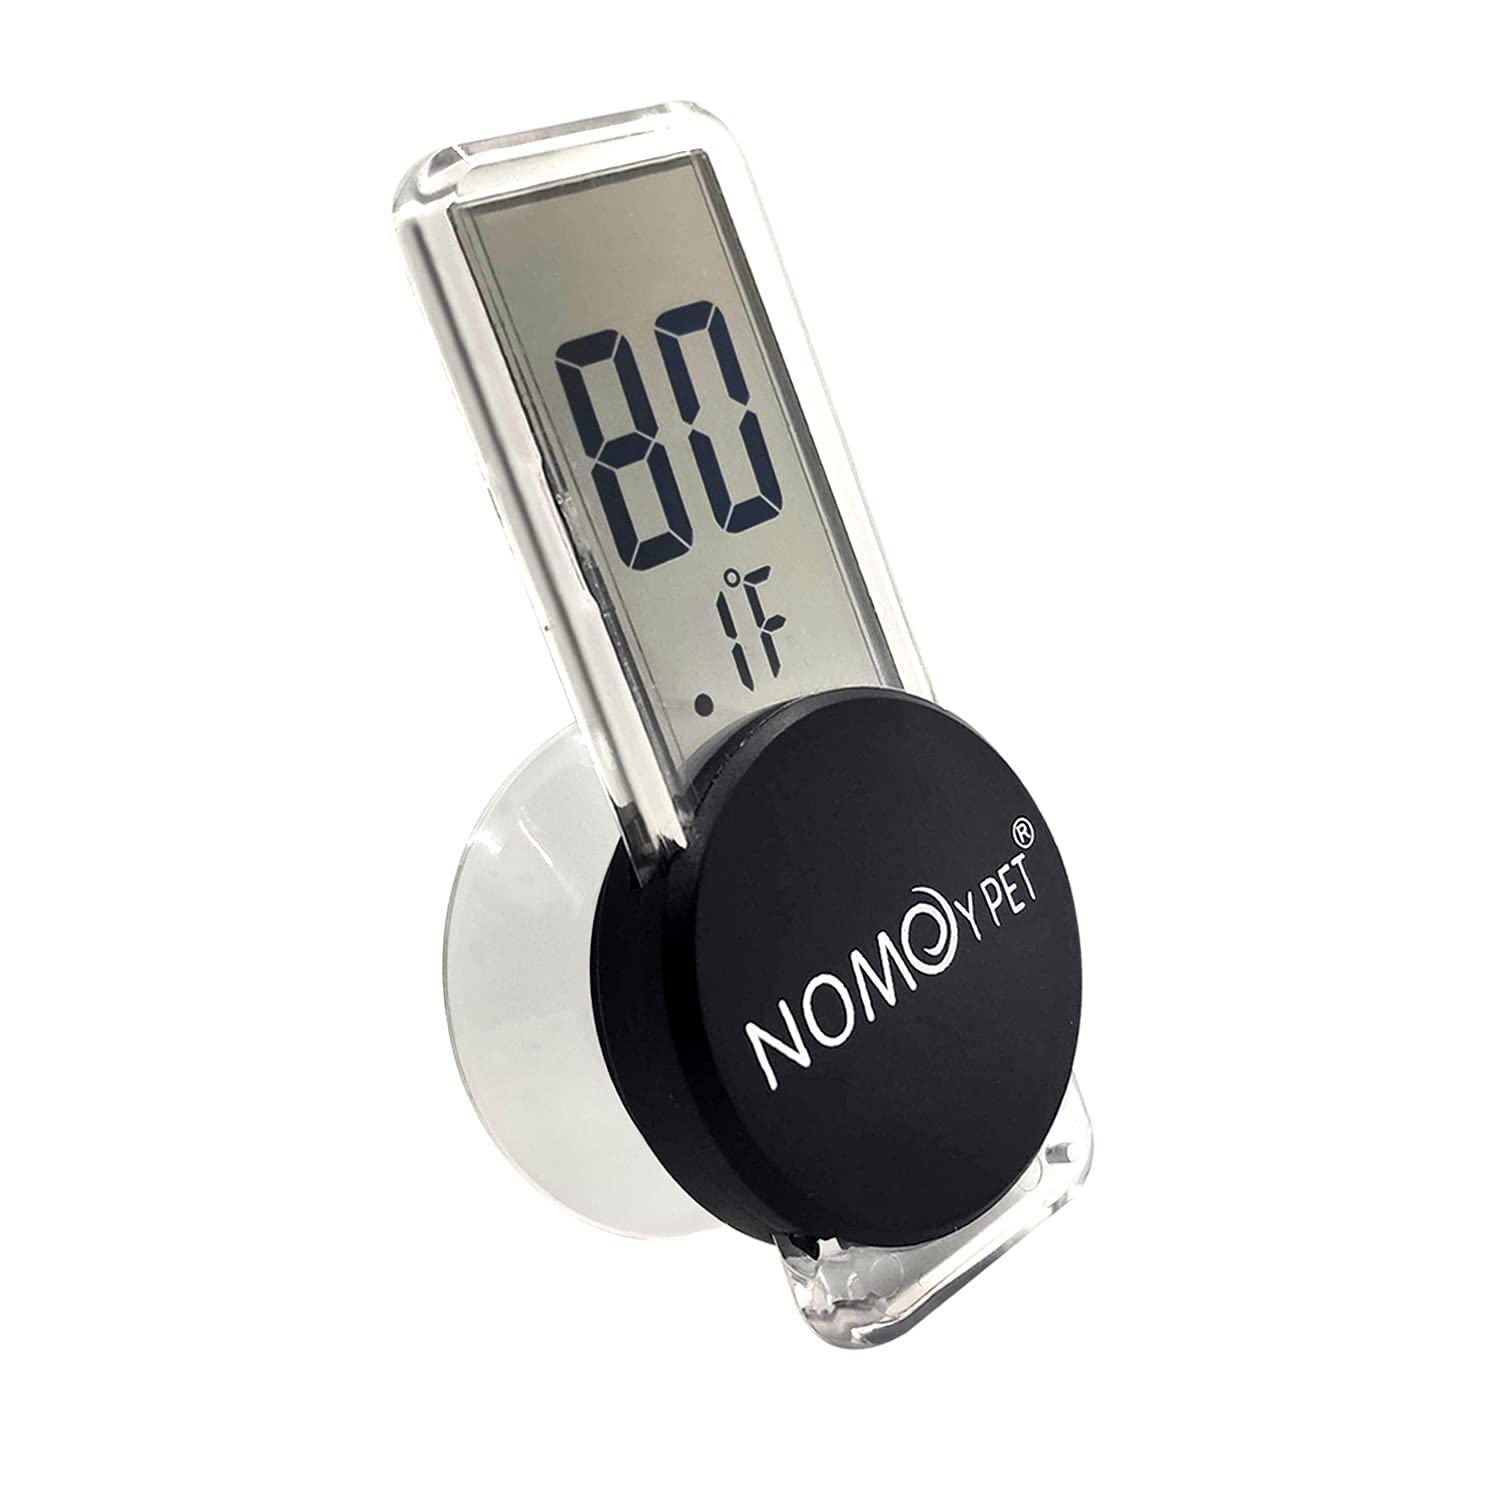 Digital Terrarium Thermometer / Hygrometer / 6-PACK